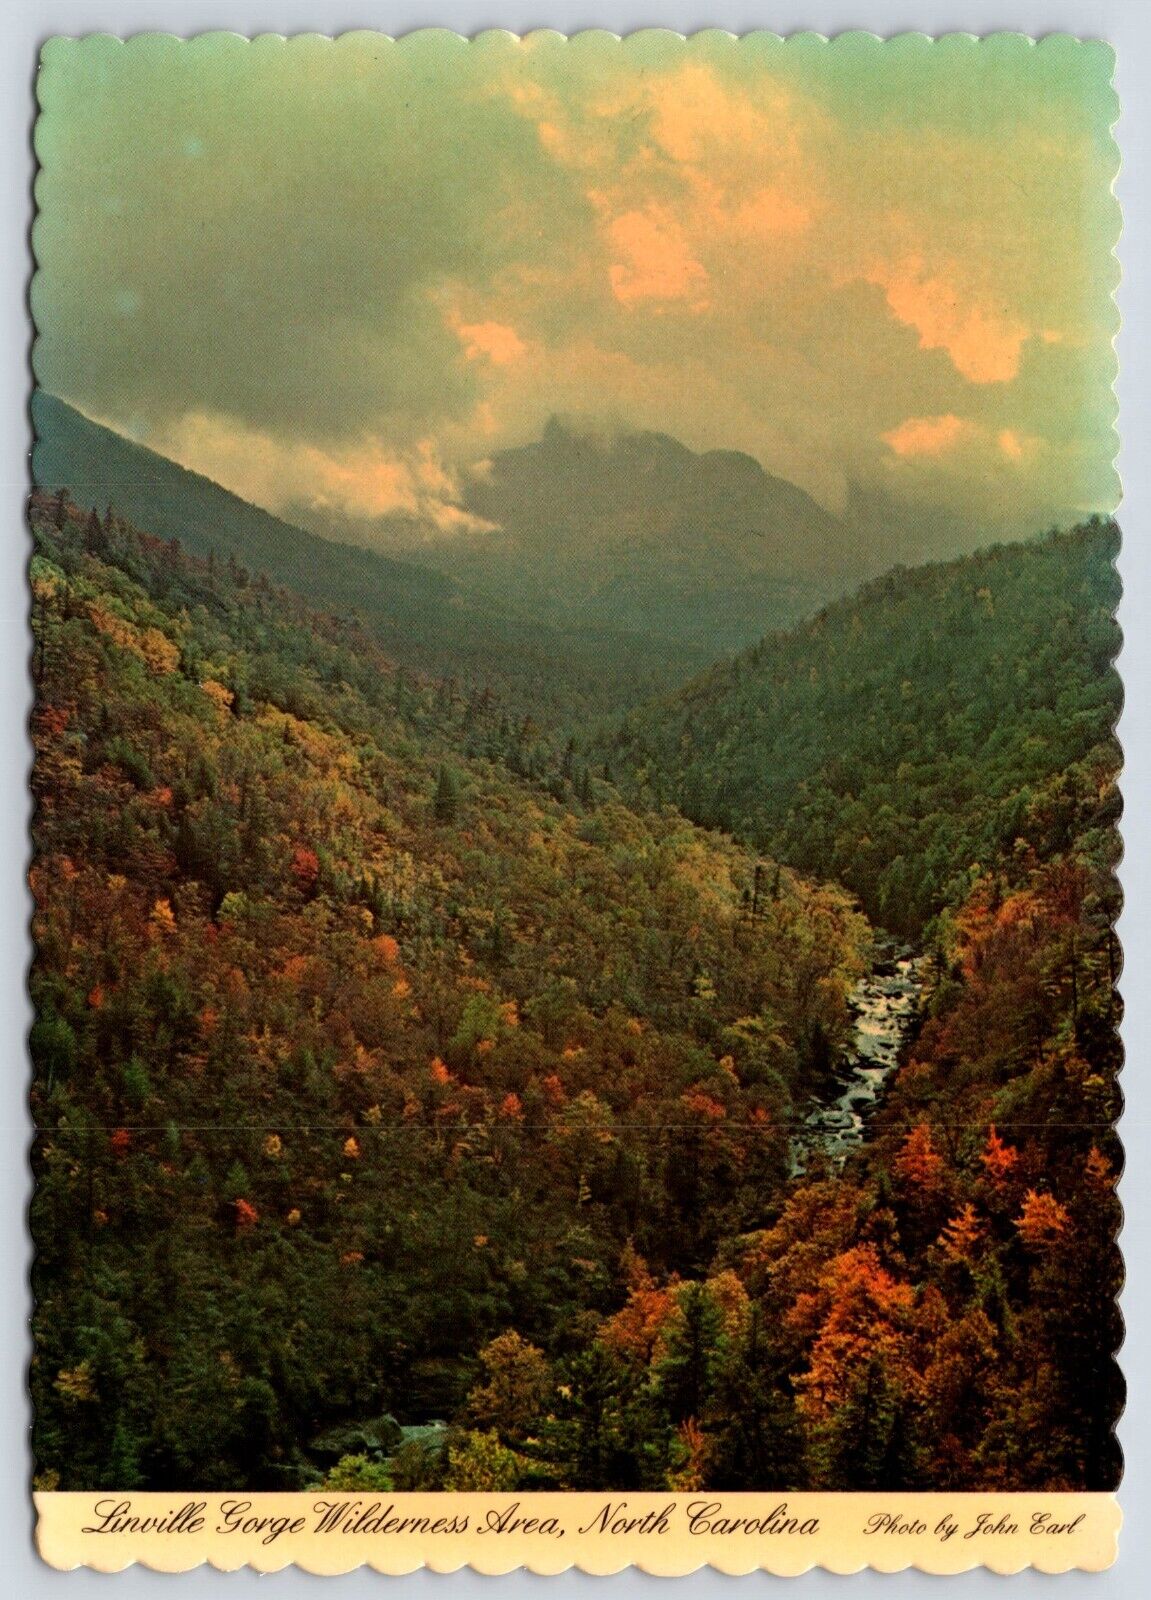 North Carolina Linville Gorge Wilderness Area Vintage Postcard Continental